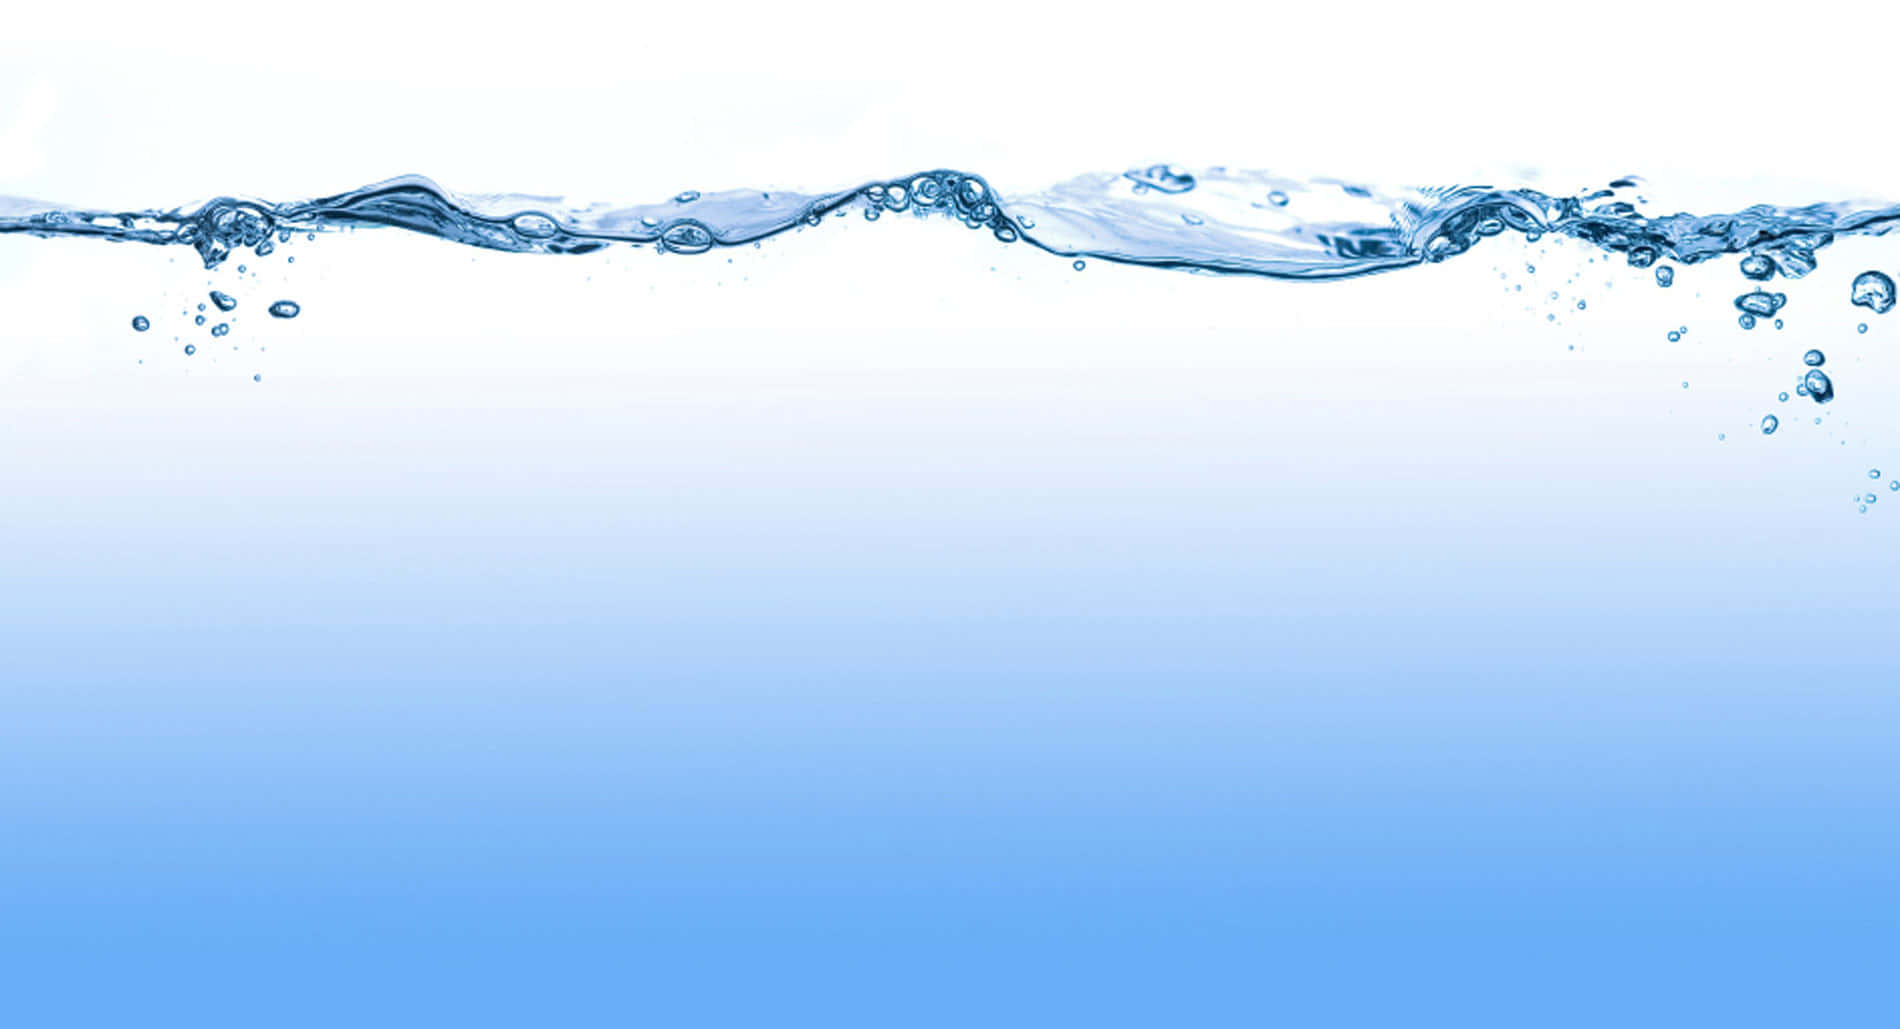 Water Splashing On A Blue Background